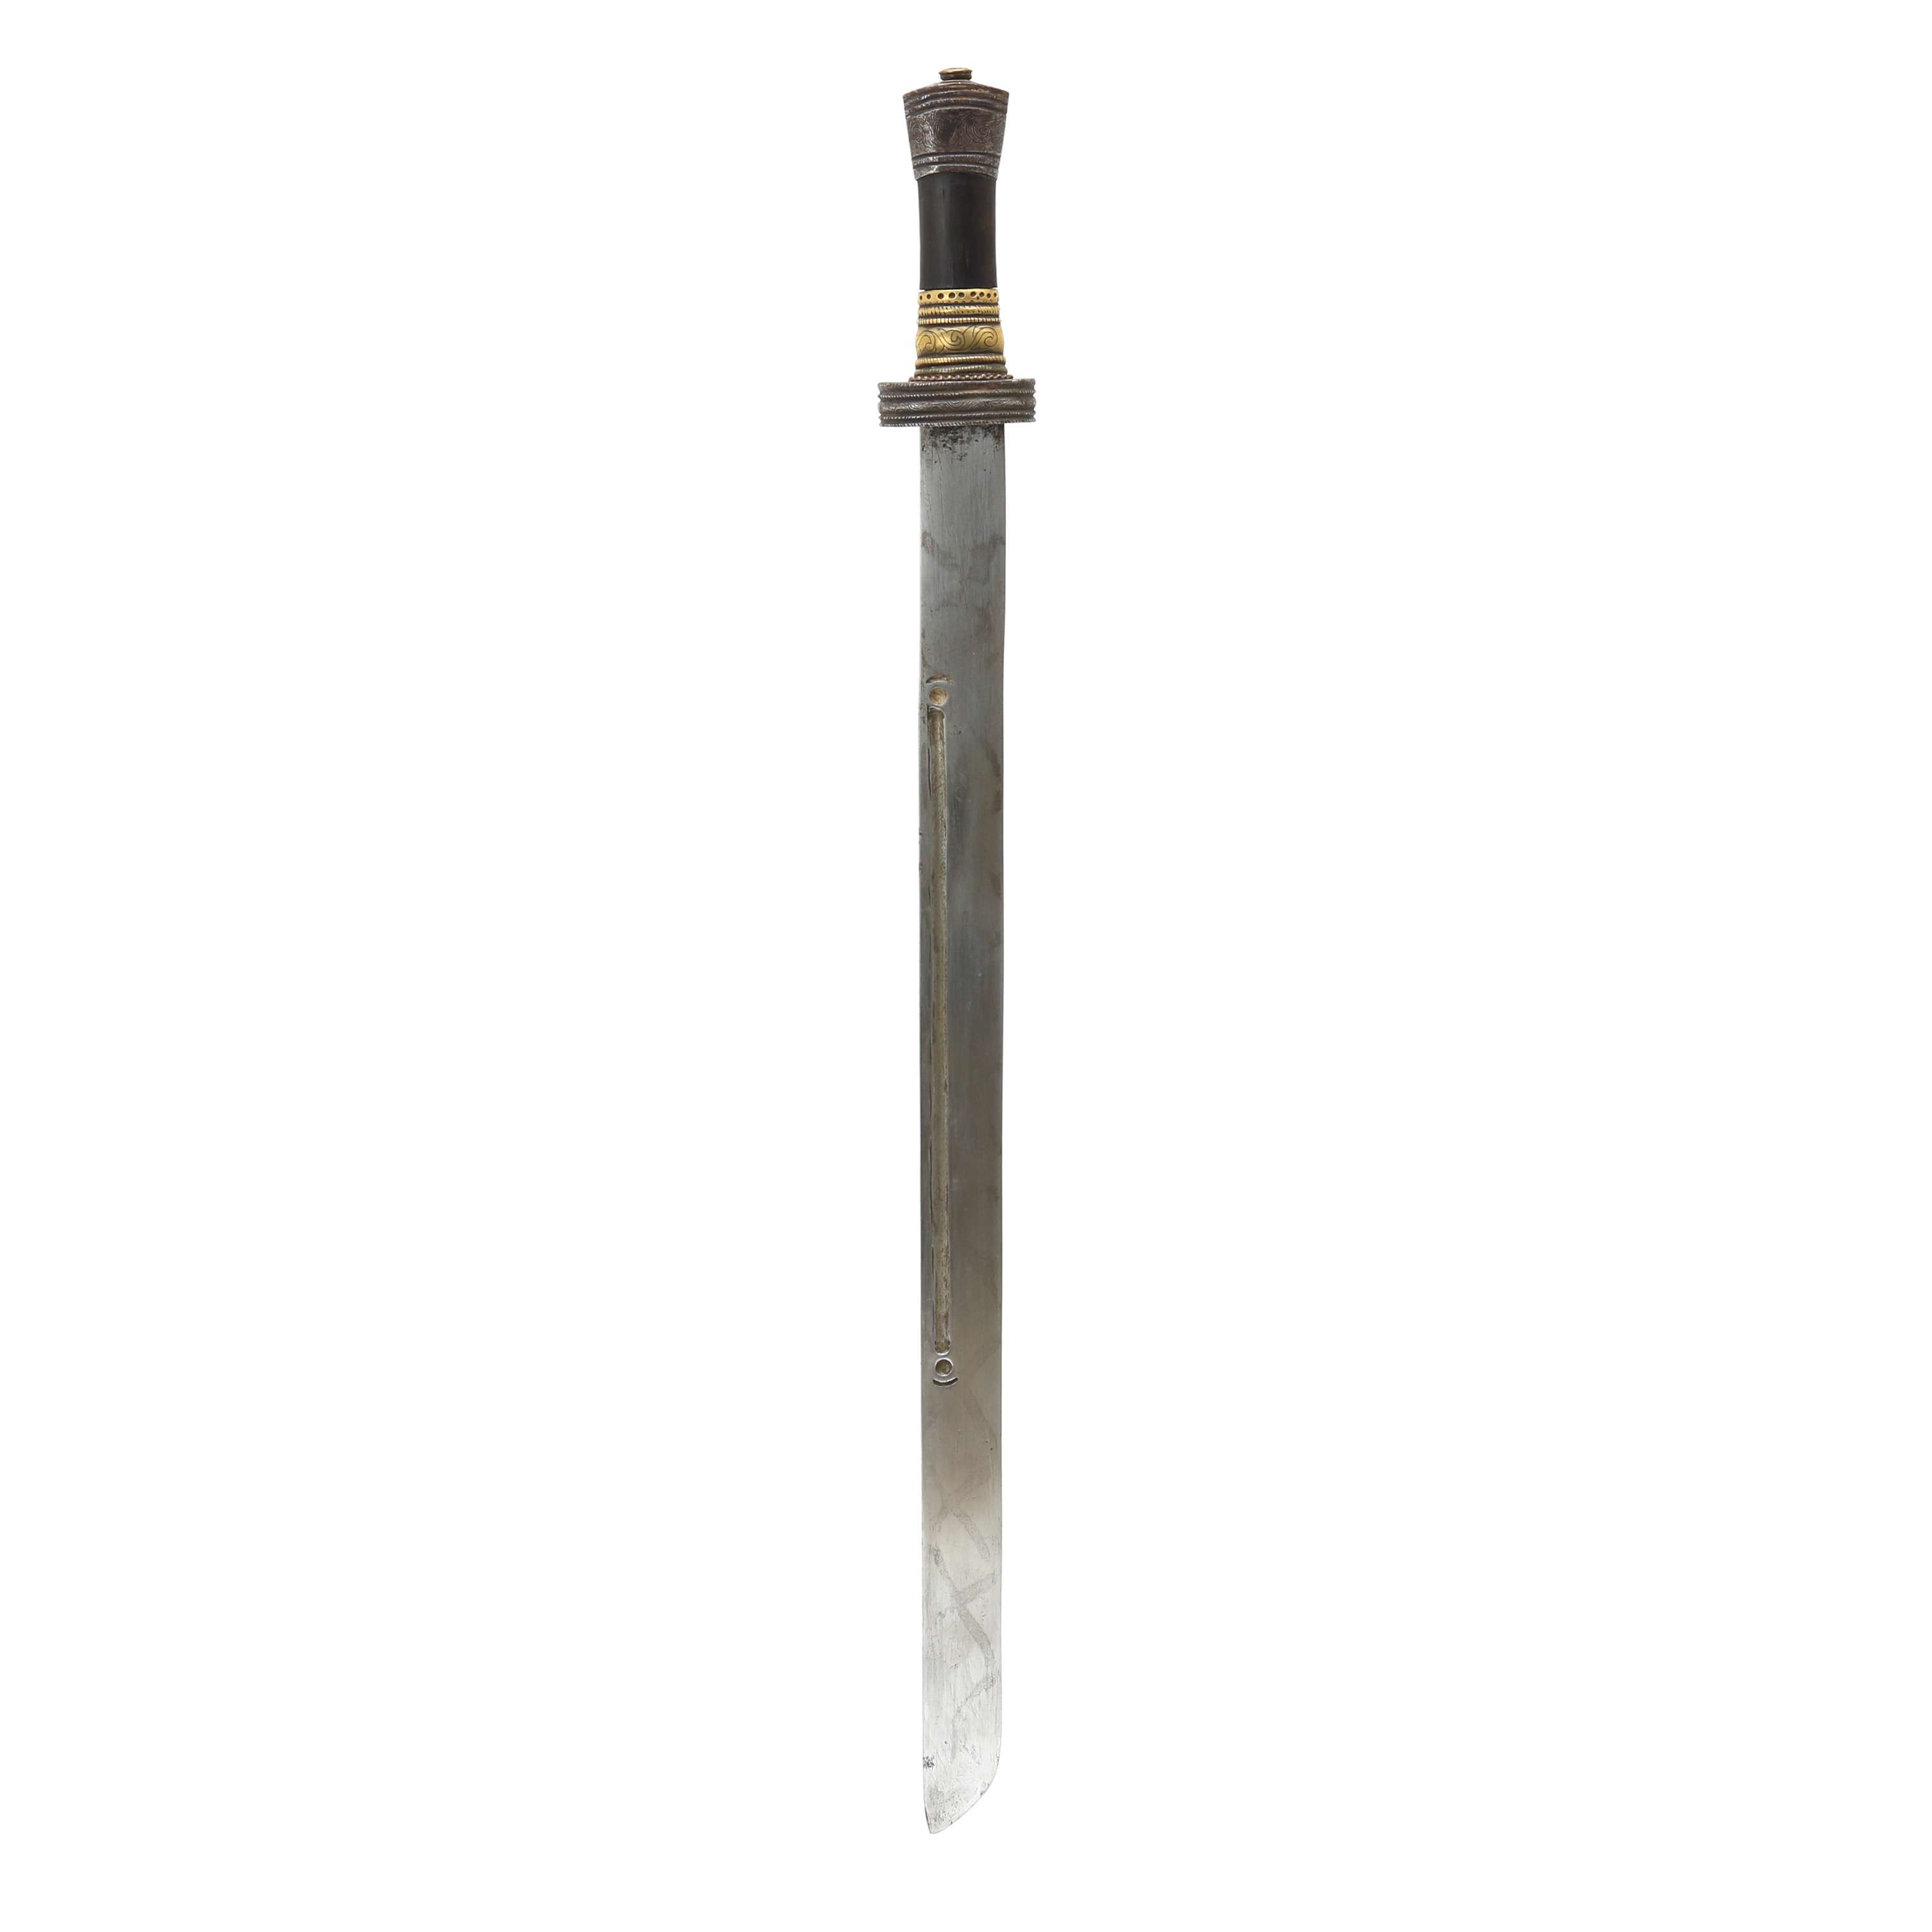 Amdo sword